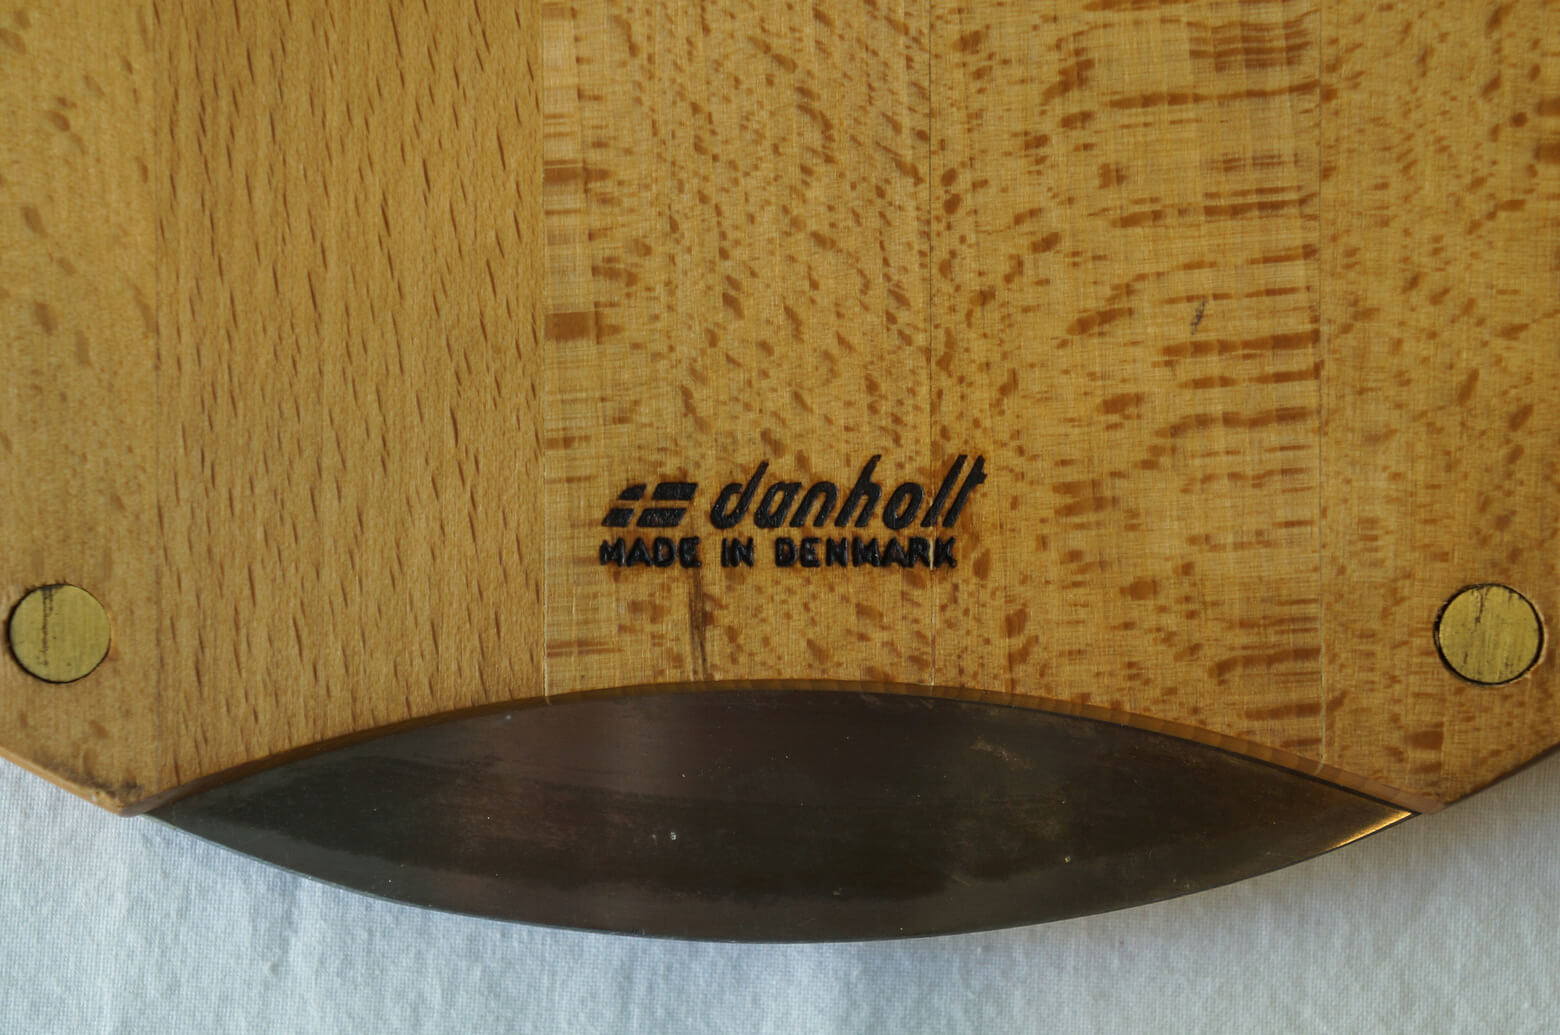 Beech Wood Cutting Board Made In Denmark/デンマーク製 カッティングボード ビーチ材 北欧雑貨 食器 インテリア 1